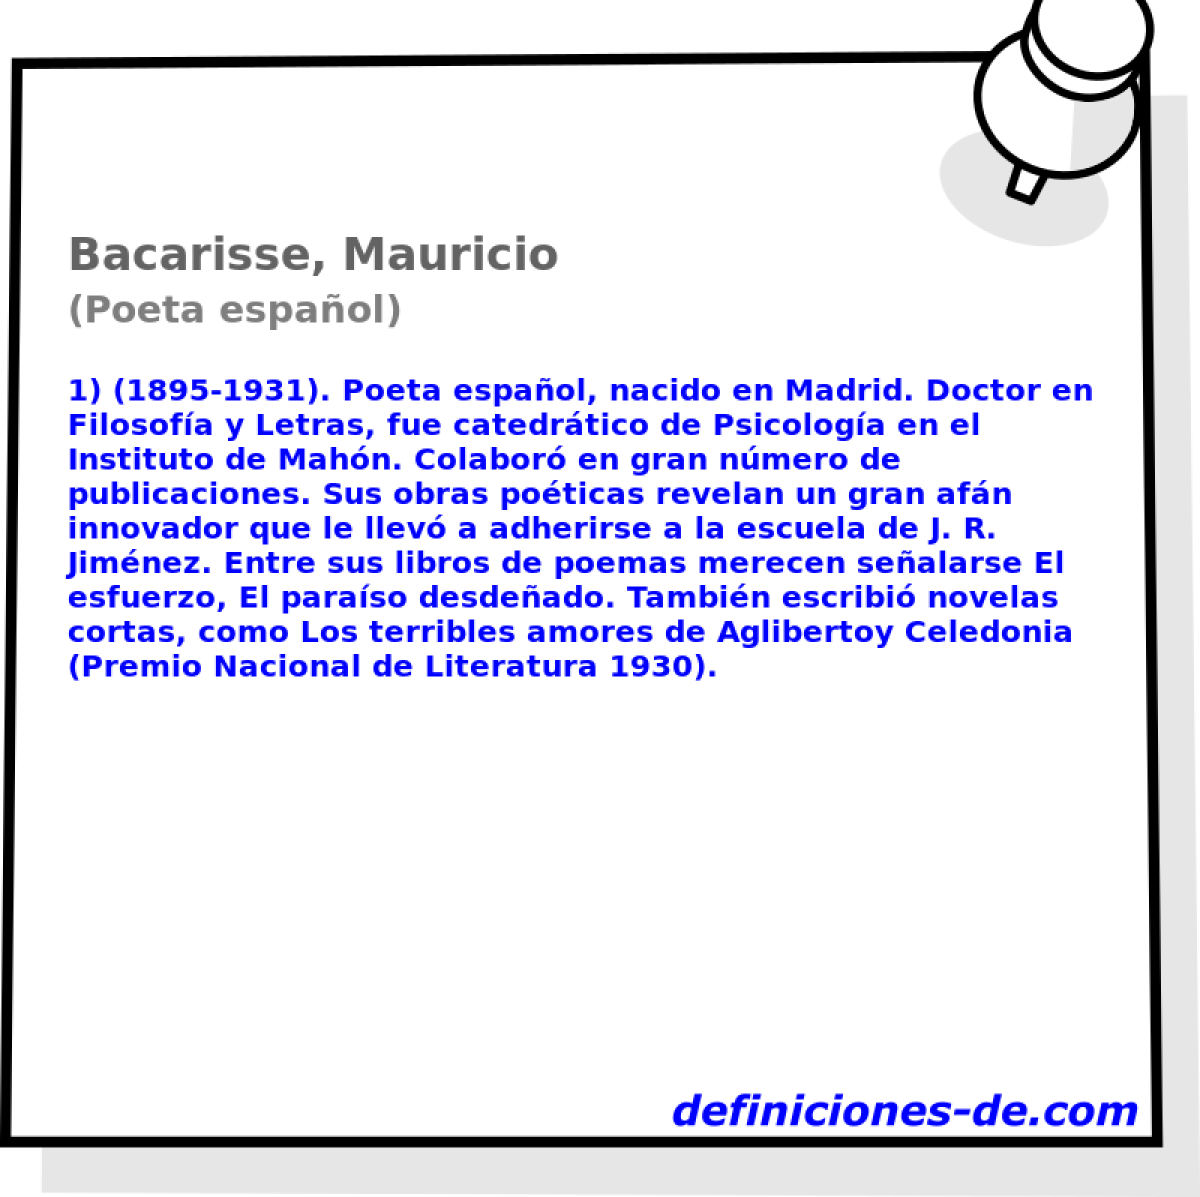 Bacarisse, Mauricio (Poeta espaol)